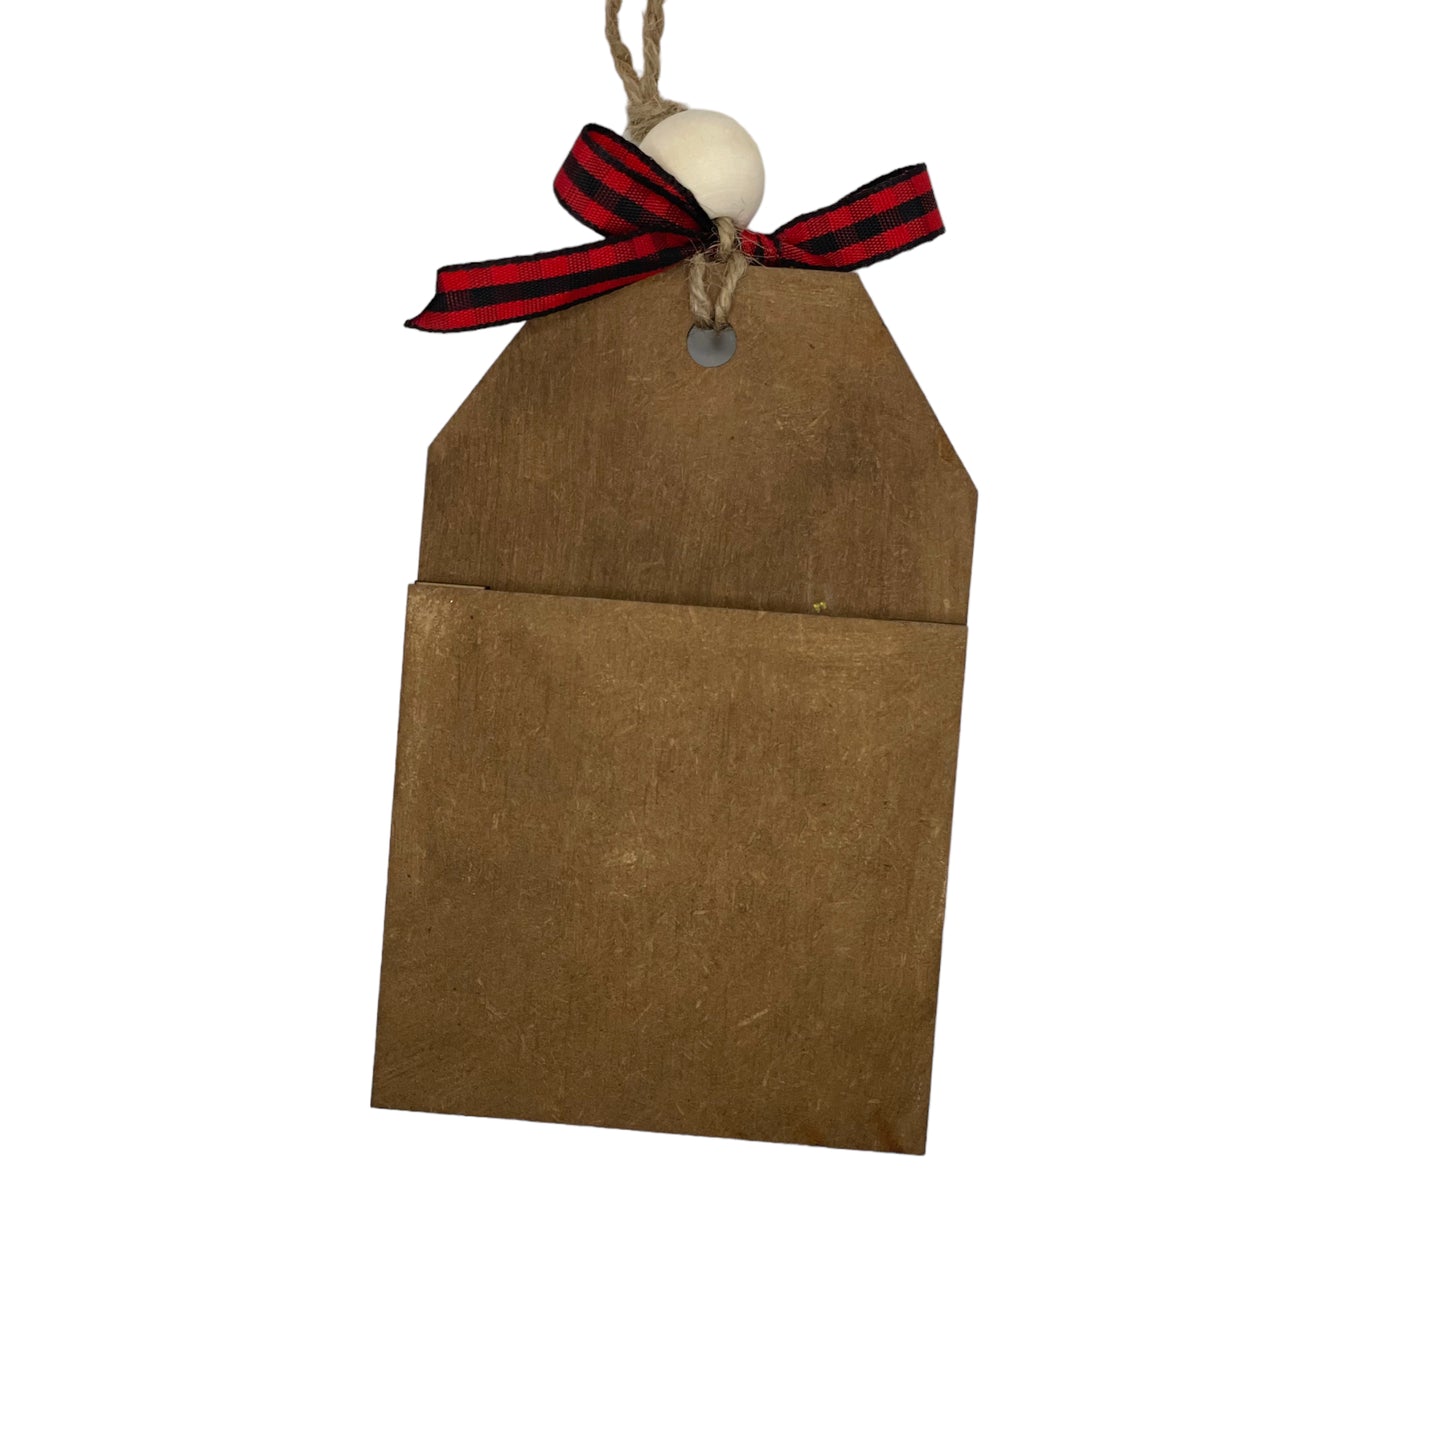 Christmas Ornament - Red Nosed Reindeer Money/Gift Card Holder